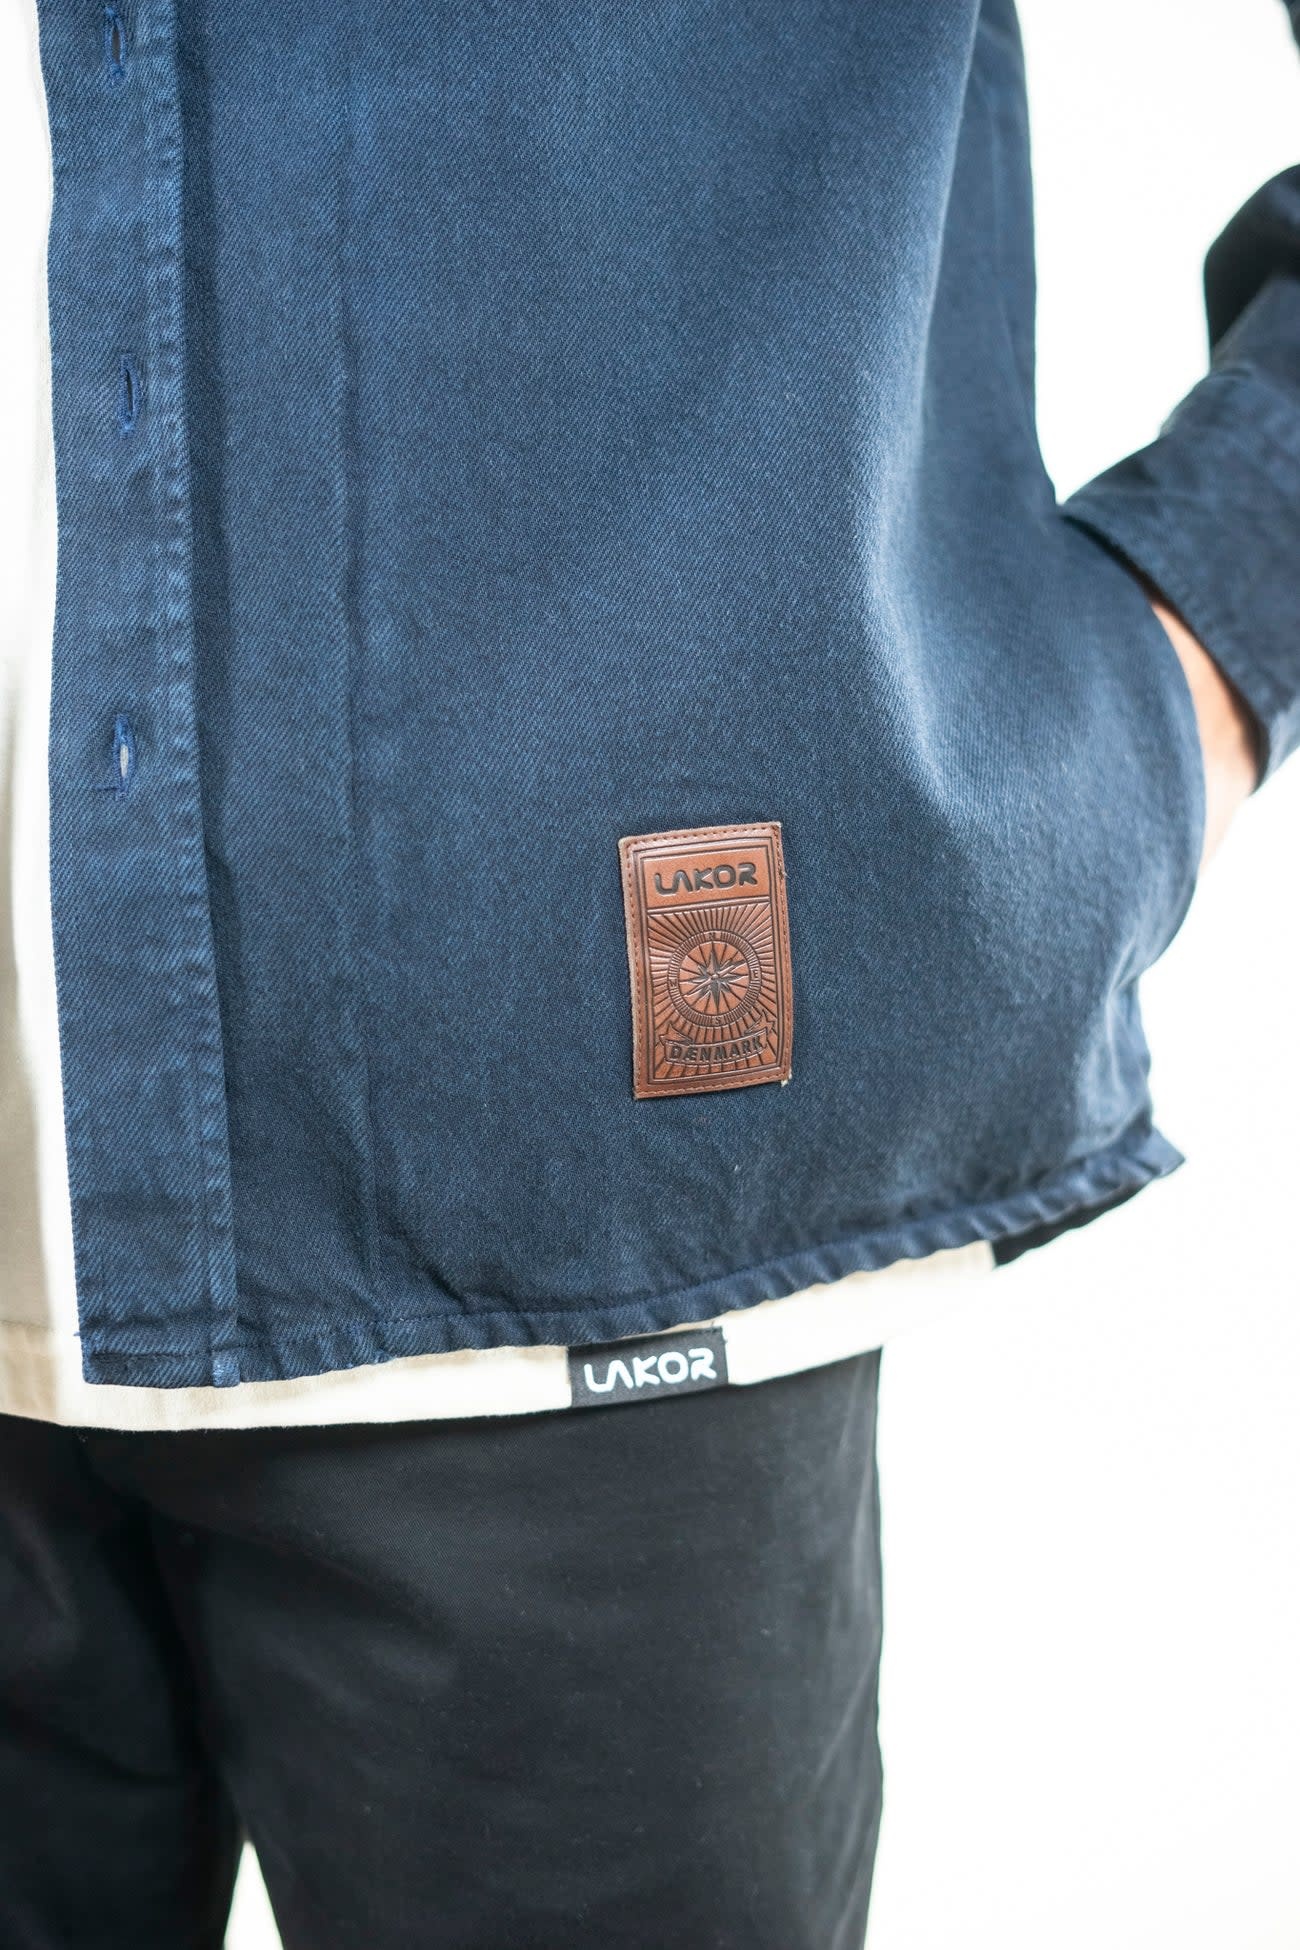 Lakor Lakor, Knokkel Shirt, navy, XL